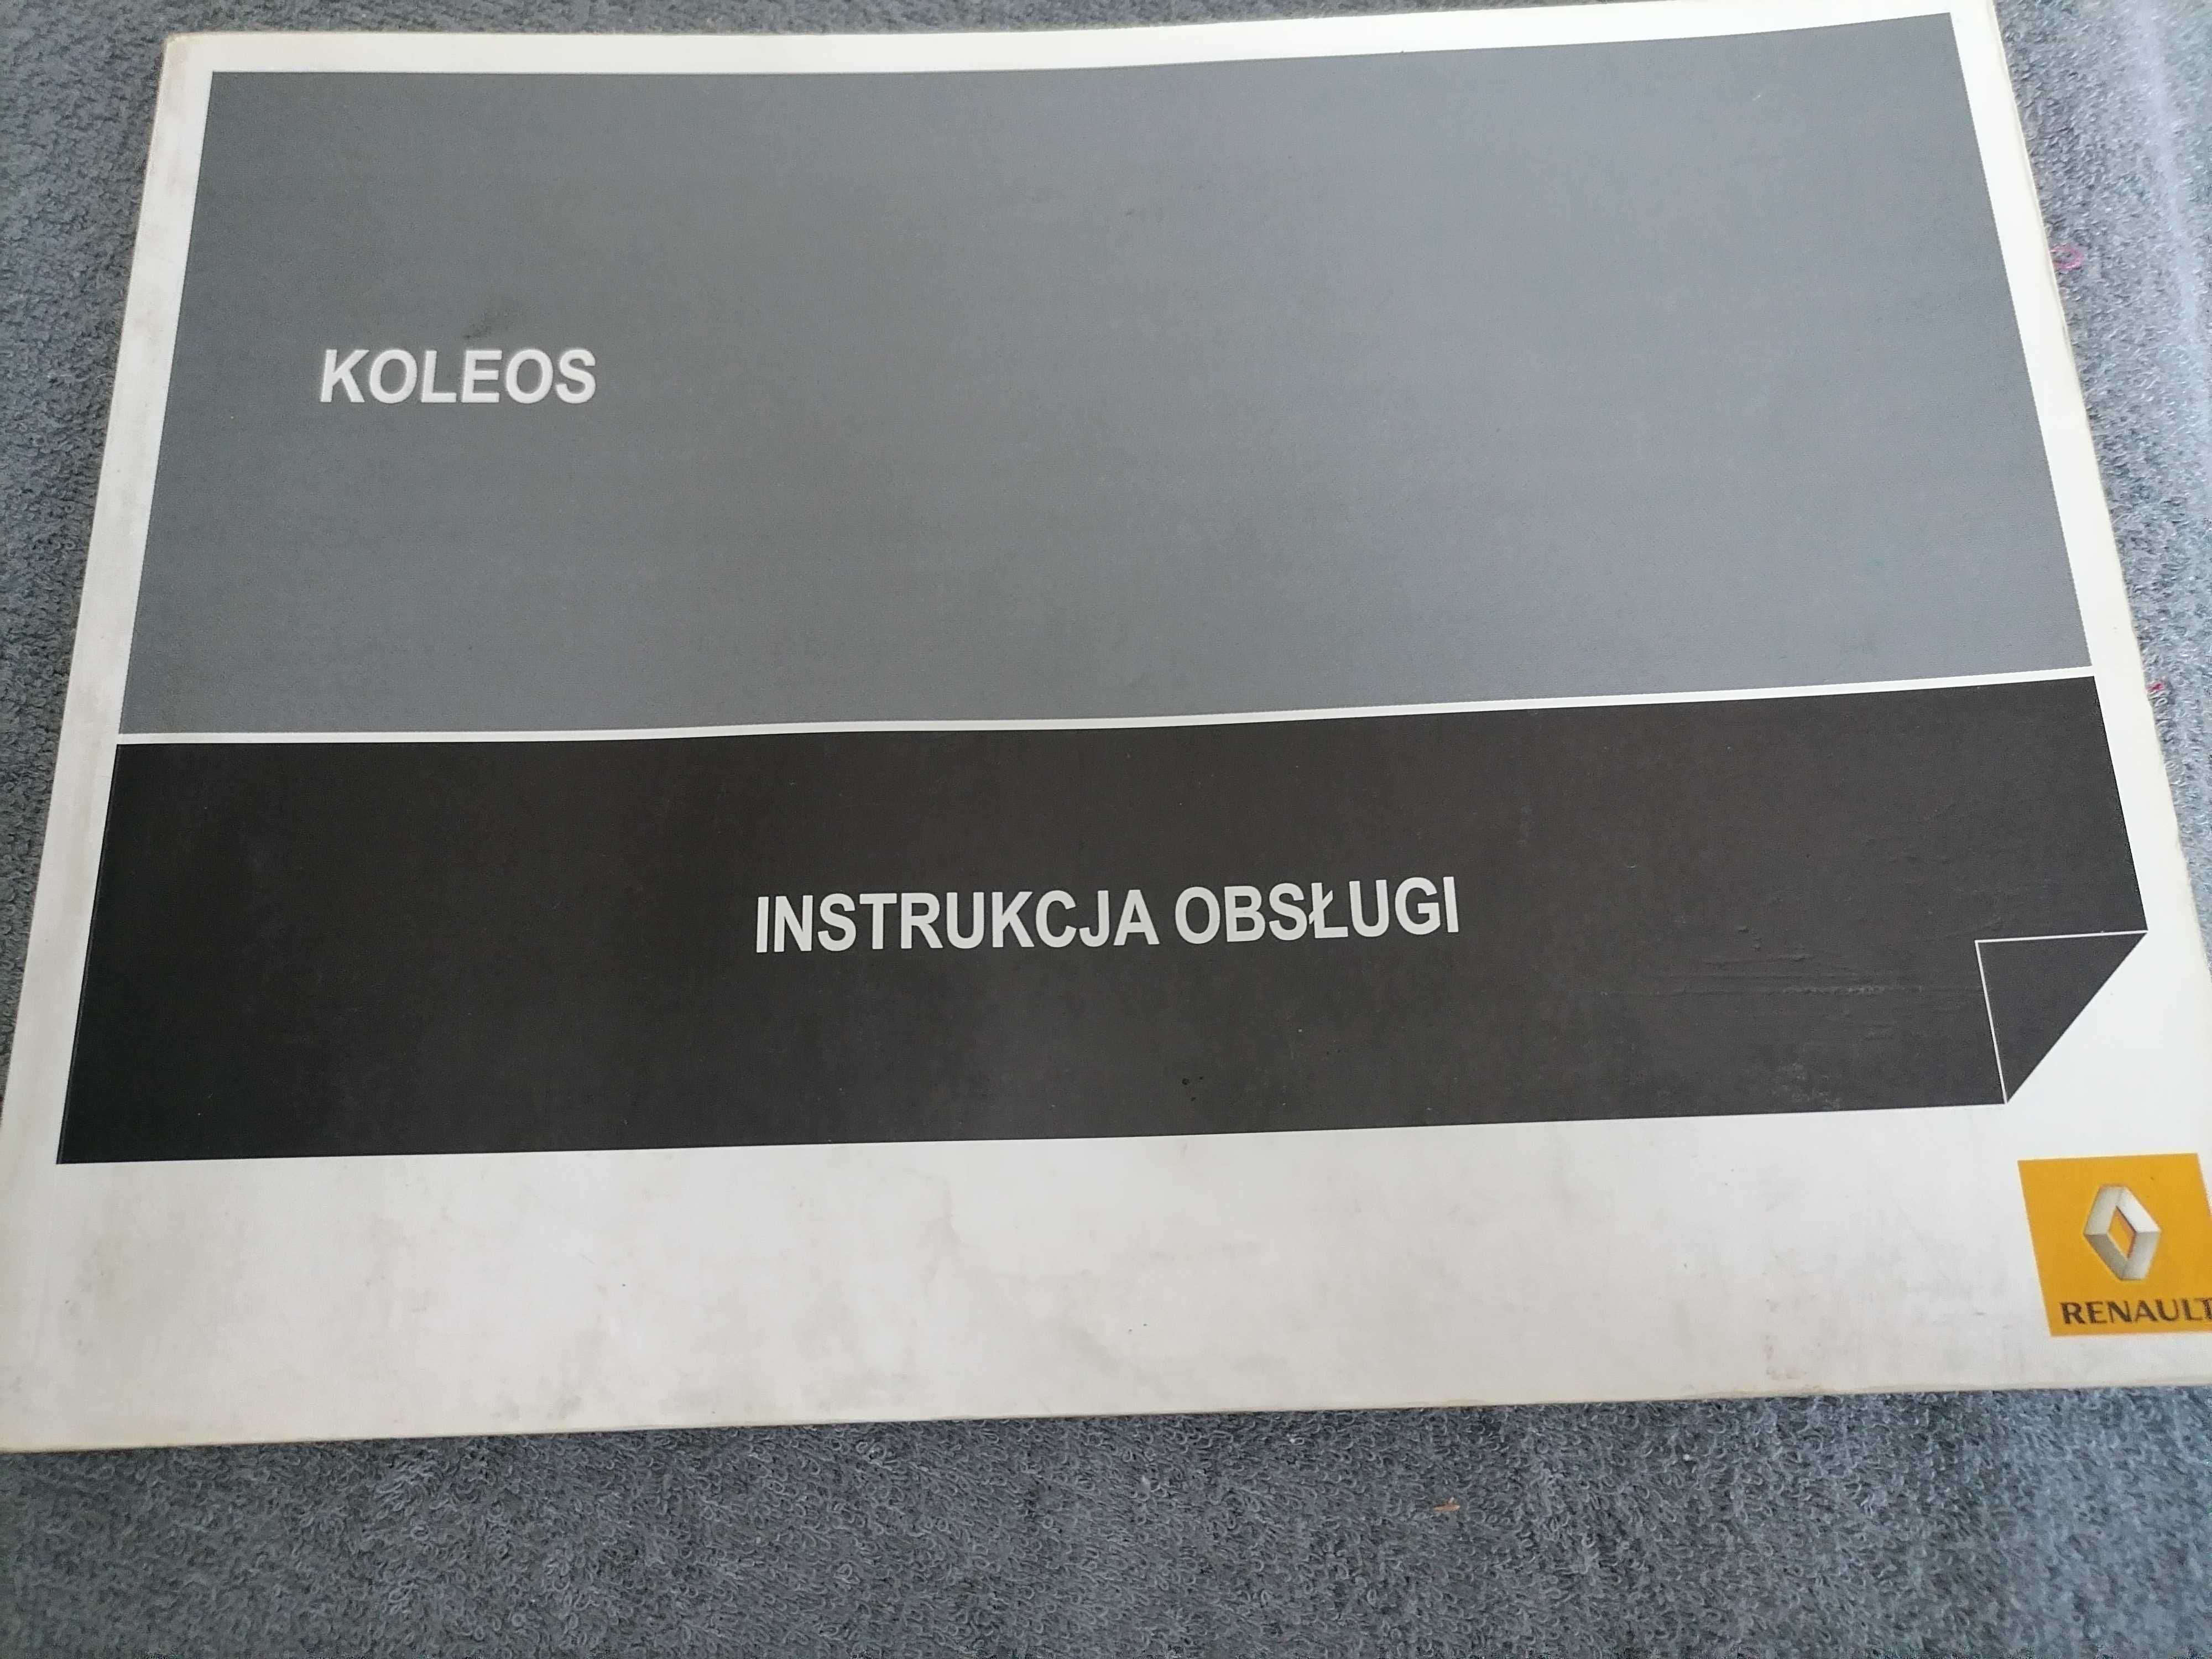 Instrukcja książka obsługi Renault koleos